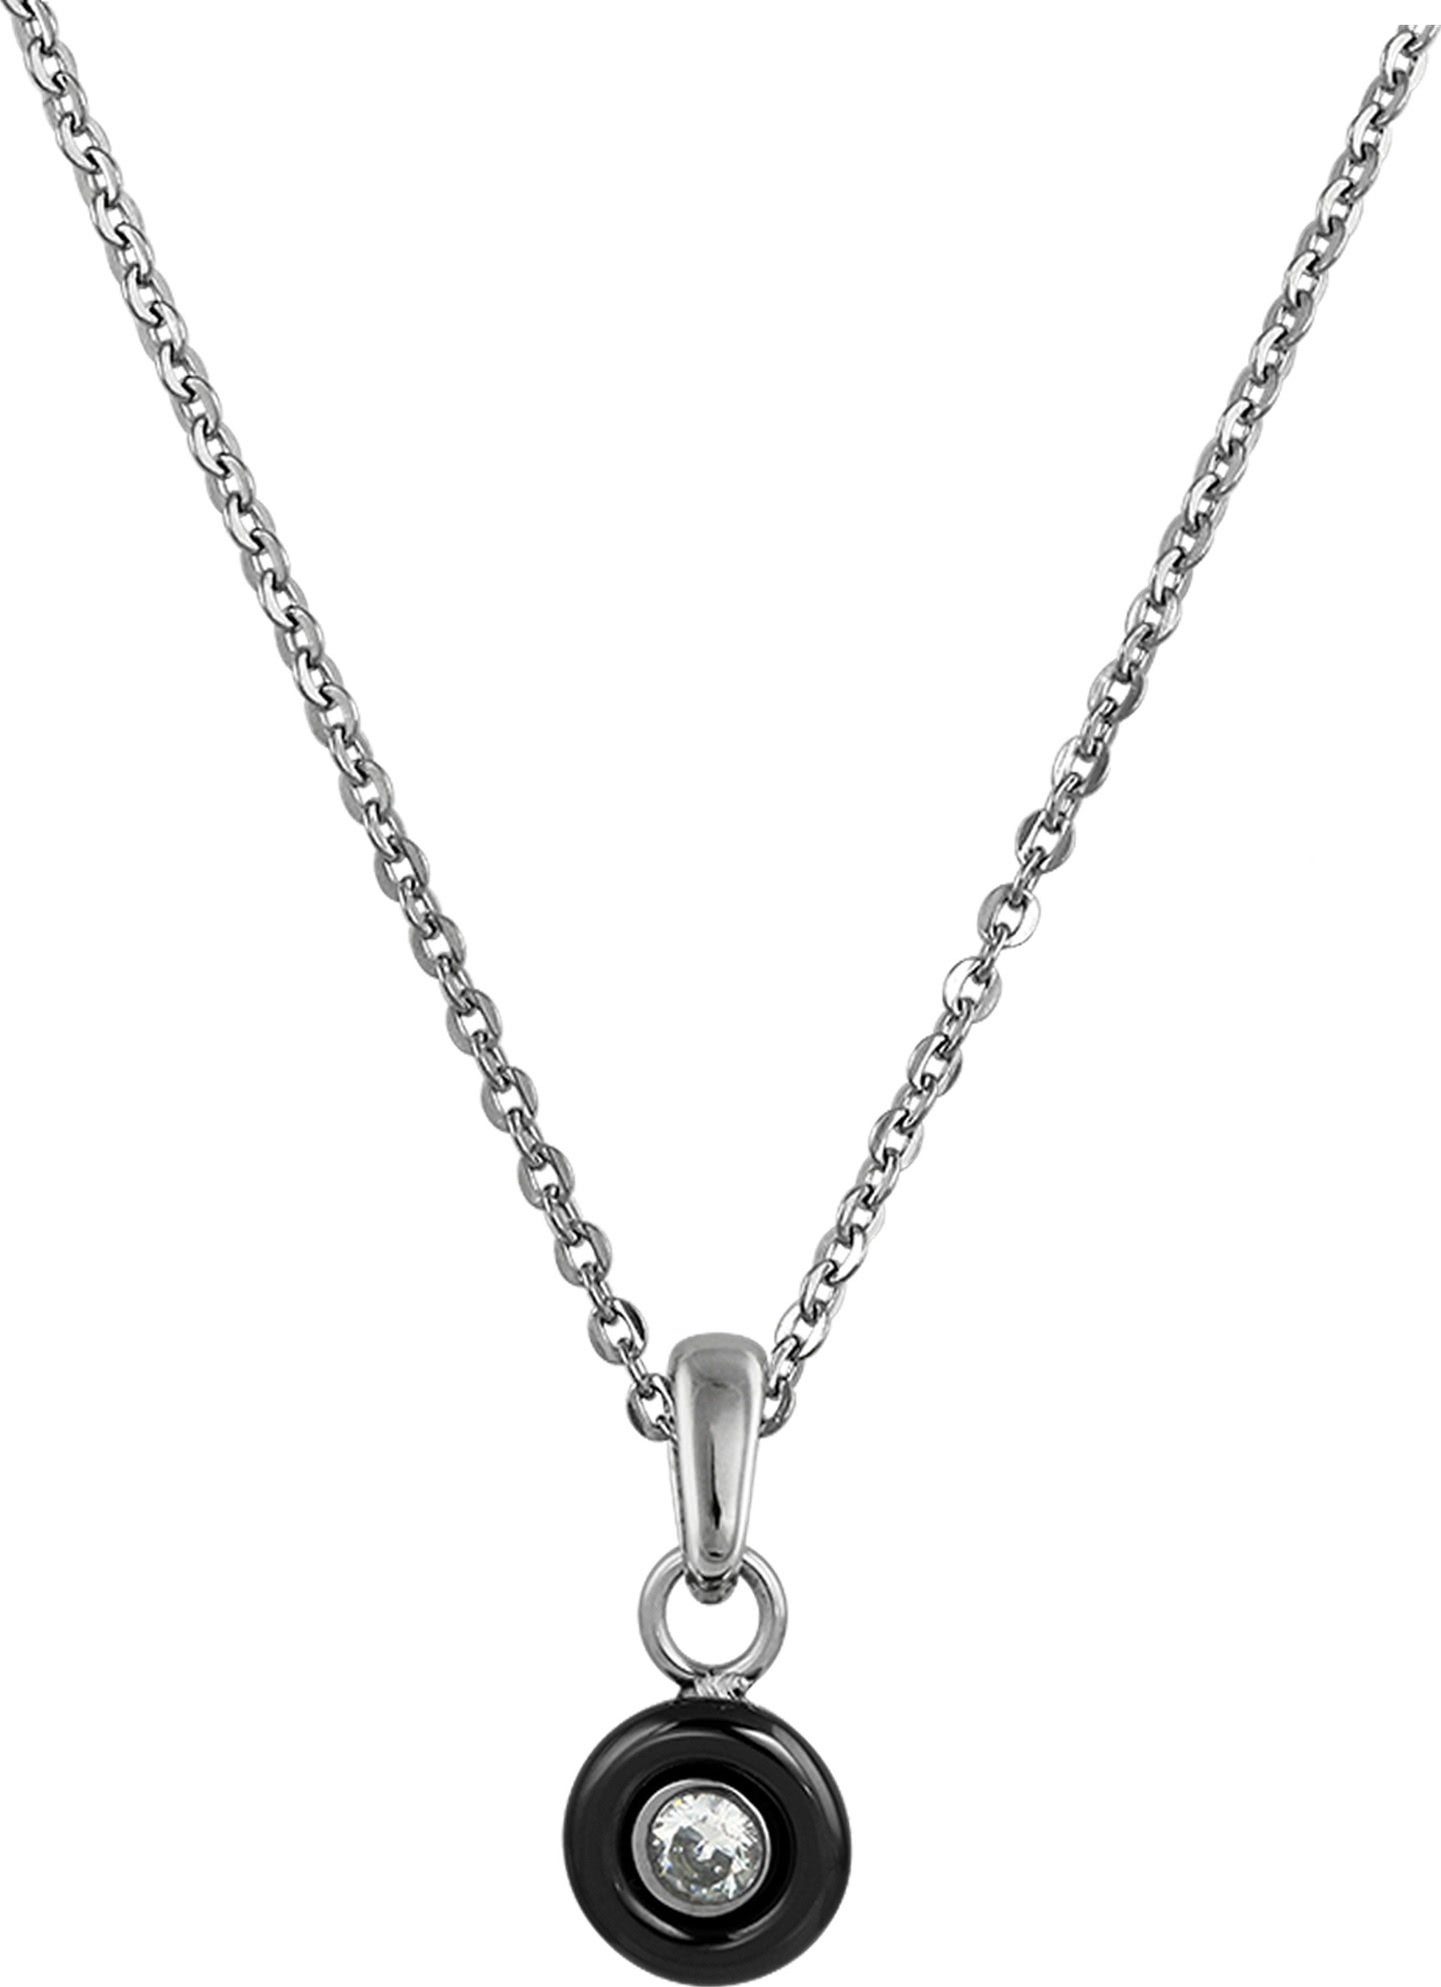 Amello Edelstahlkette Amello Stein Halskette silber schwarz (Halskette), Damen Halsketten (Stein) aus Edelstahl (Stainless Steel) | Ketten ohne Anhänger